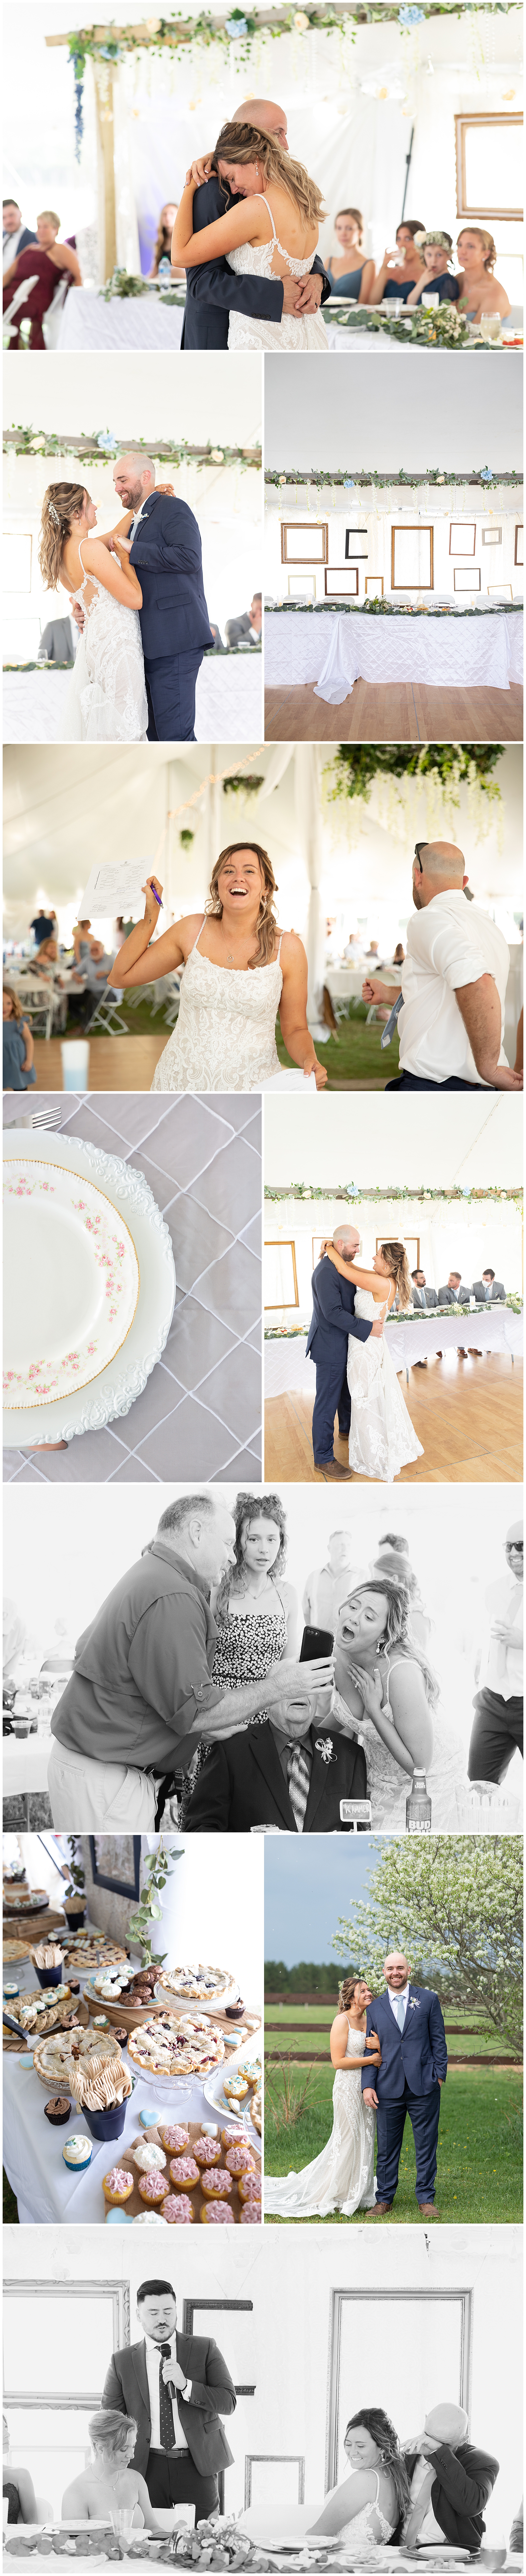 Michigan Wedding Photography, Midwest Wedding | Kuffel Photography 